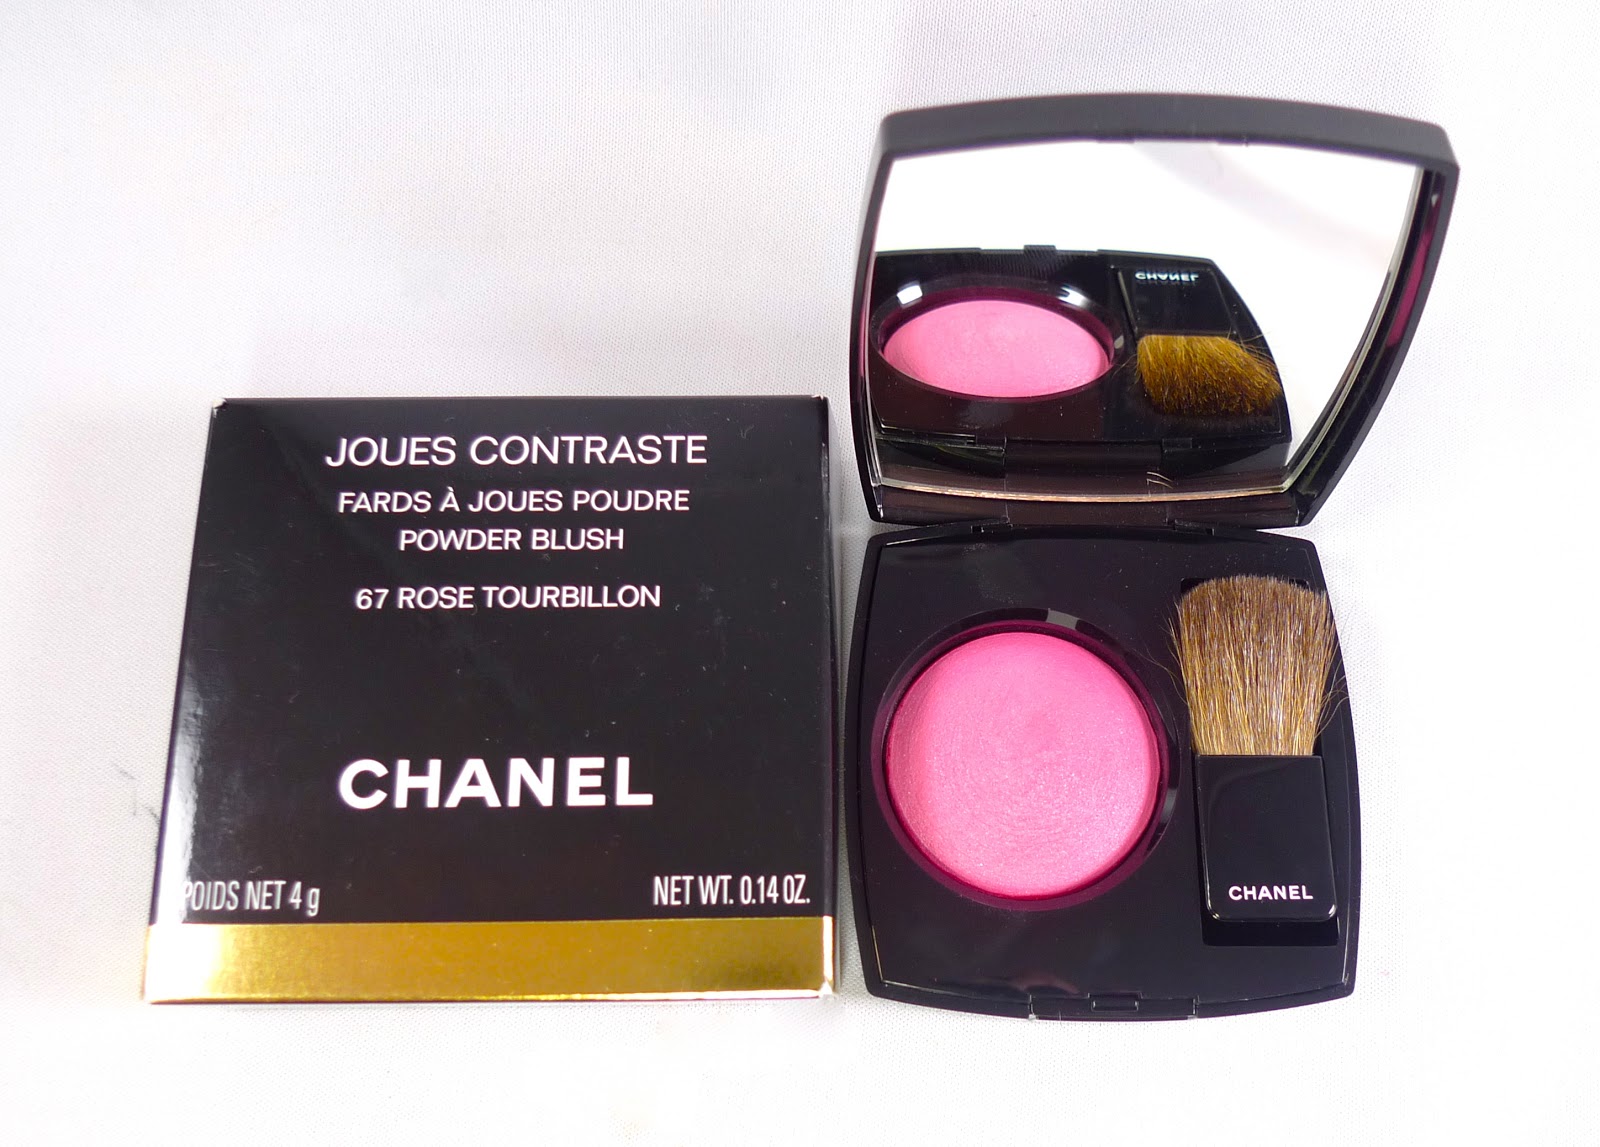 Review – Chanel Joues Contraste Powder Blush in 67 Rose Tourbillon